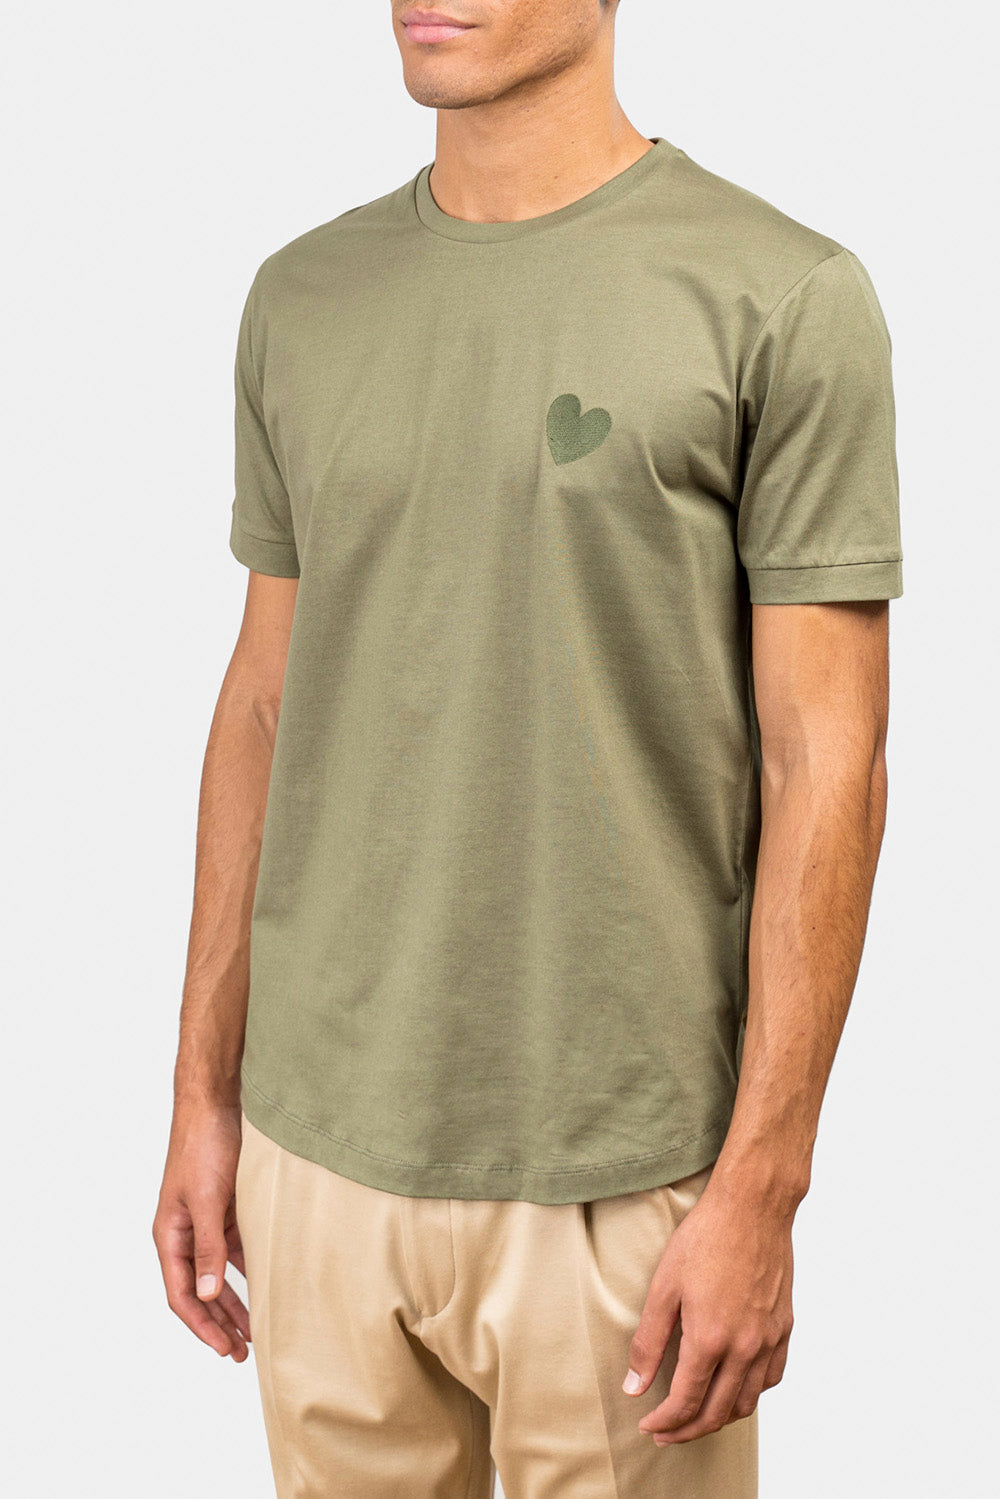 INIMIGO Pocket Flower Monogram Comfort T-shirt – Inimigo Clothing